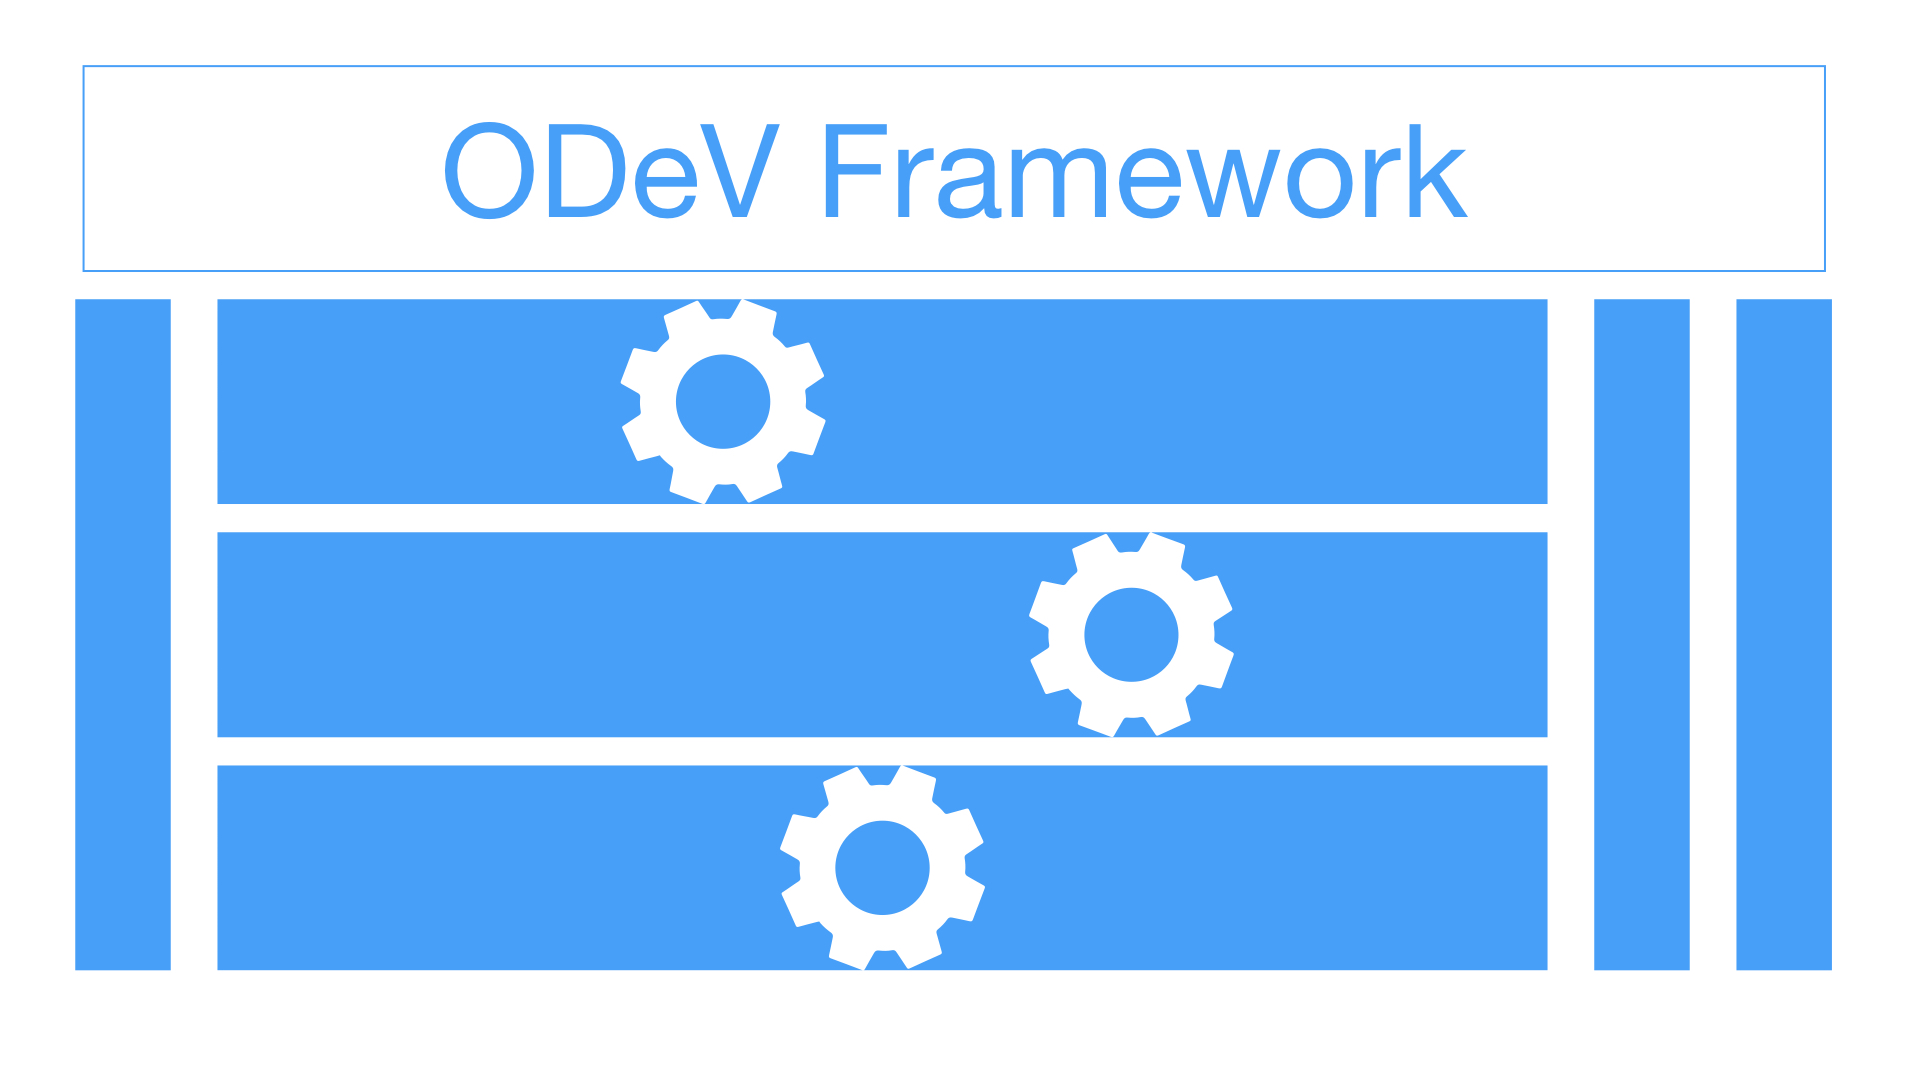 ODeV Framework